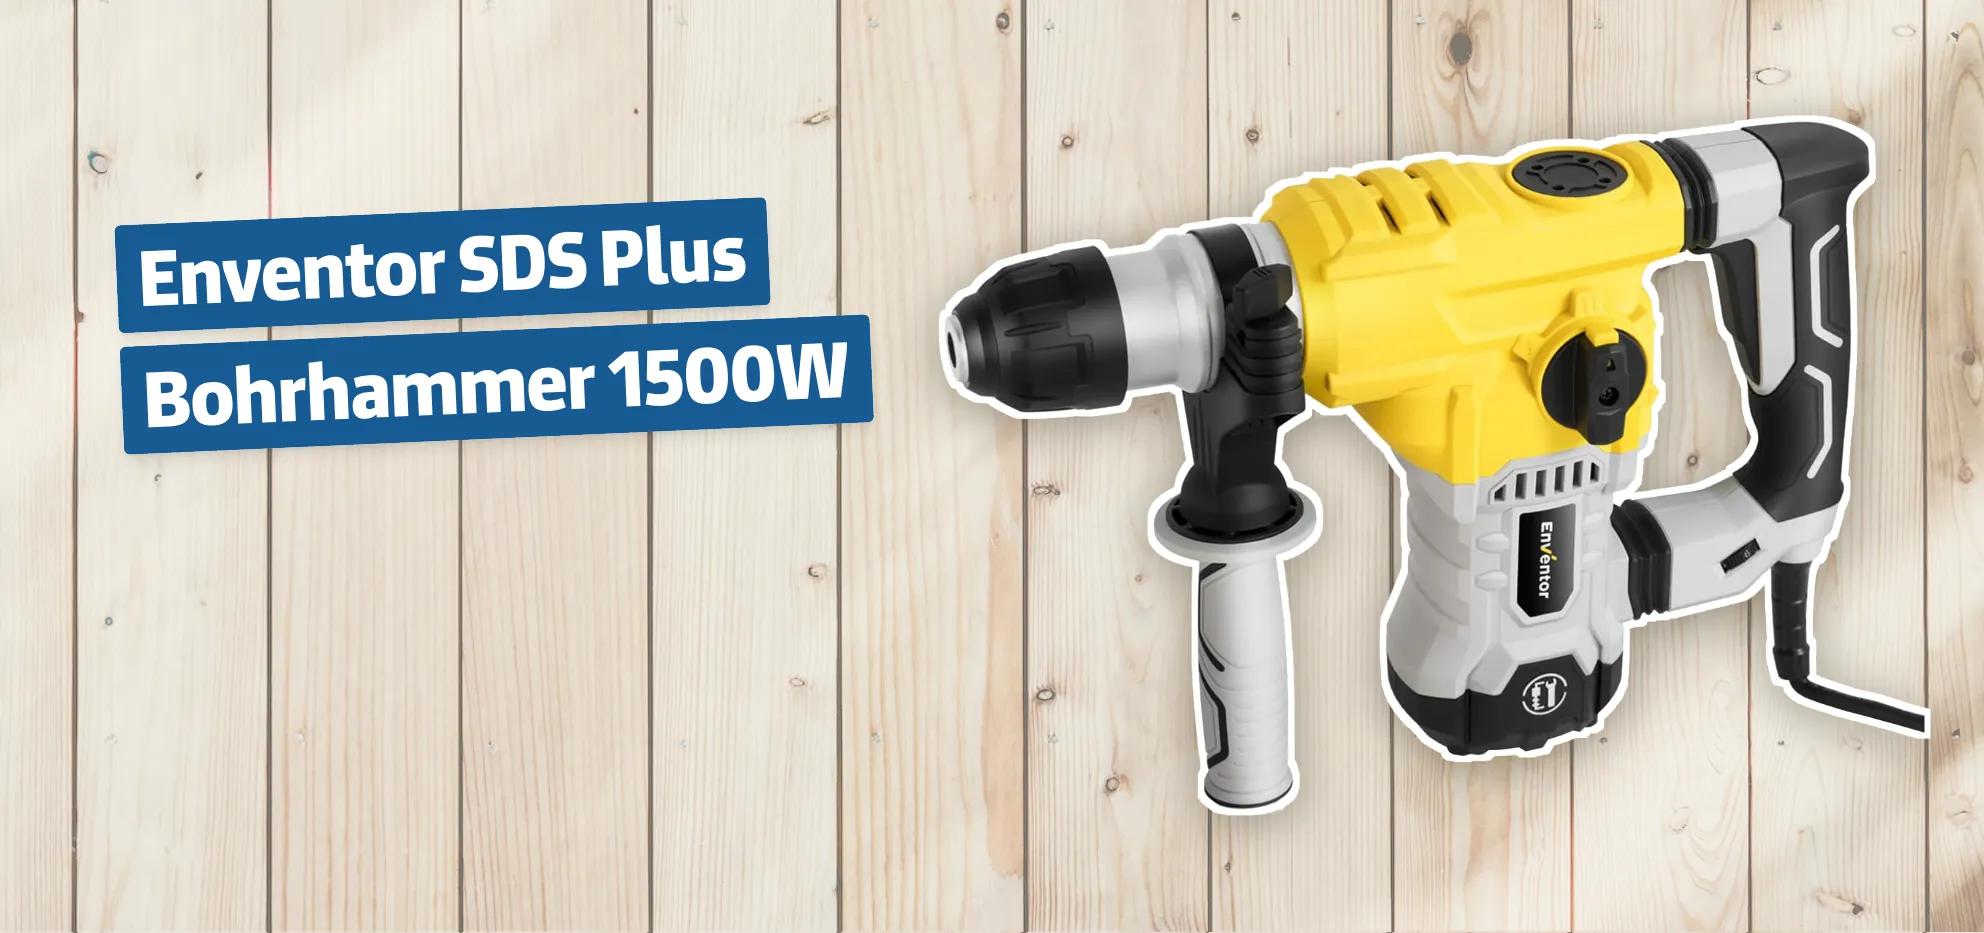 Enventor SDS Plus Bohrhammer 1500W